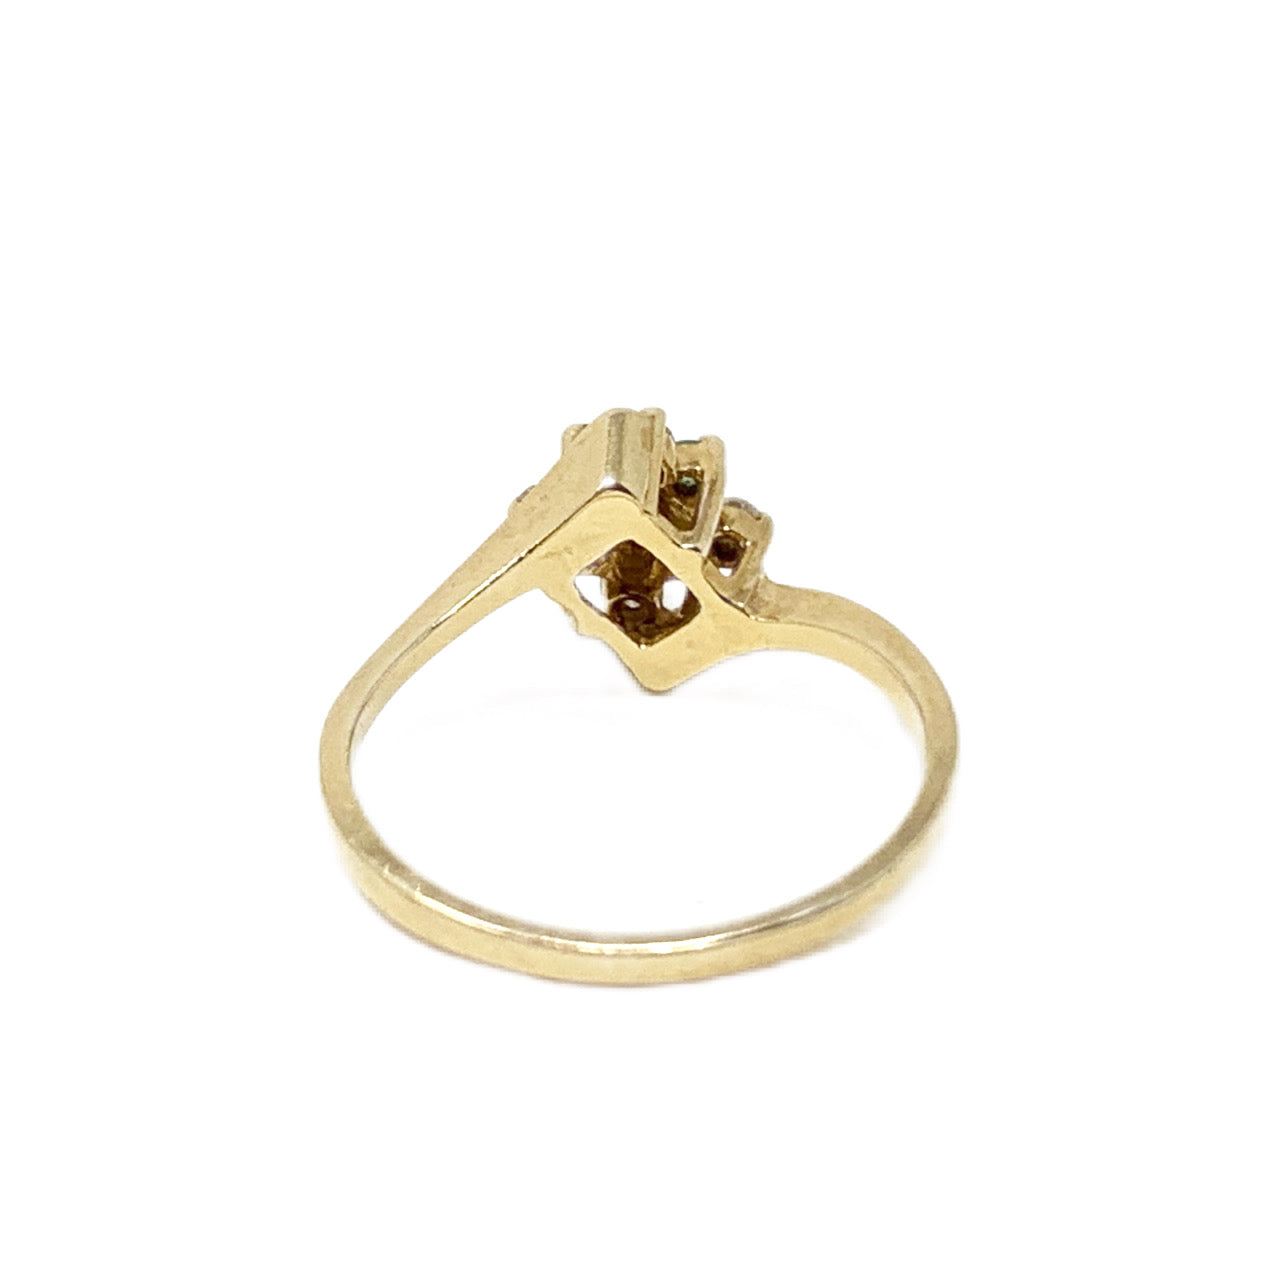 14K Gold Exquisite Natural Emerald & Diamond Ring